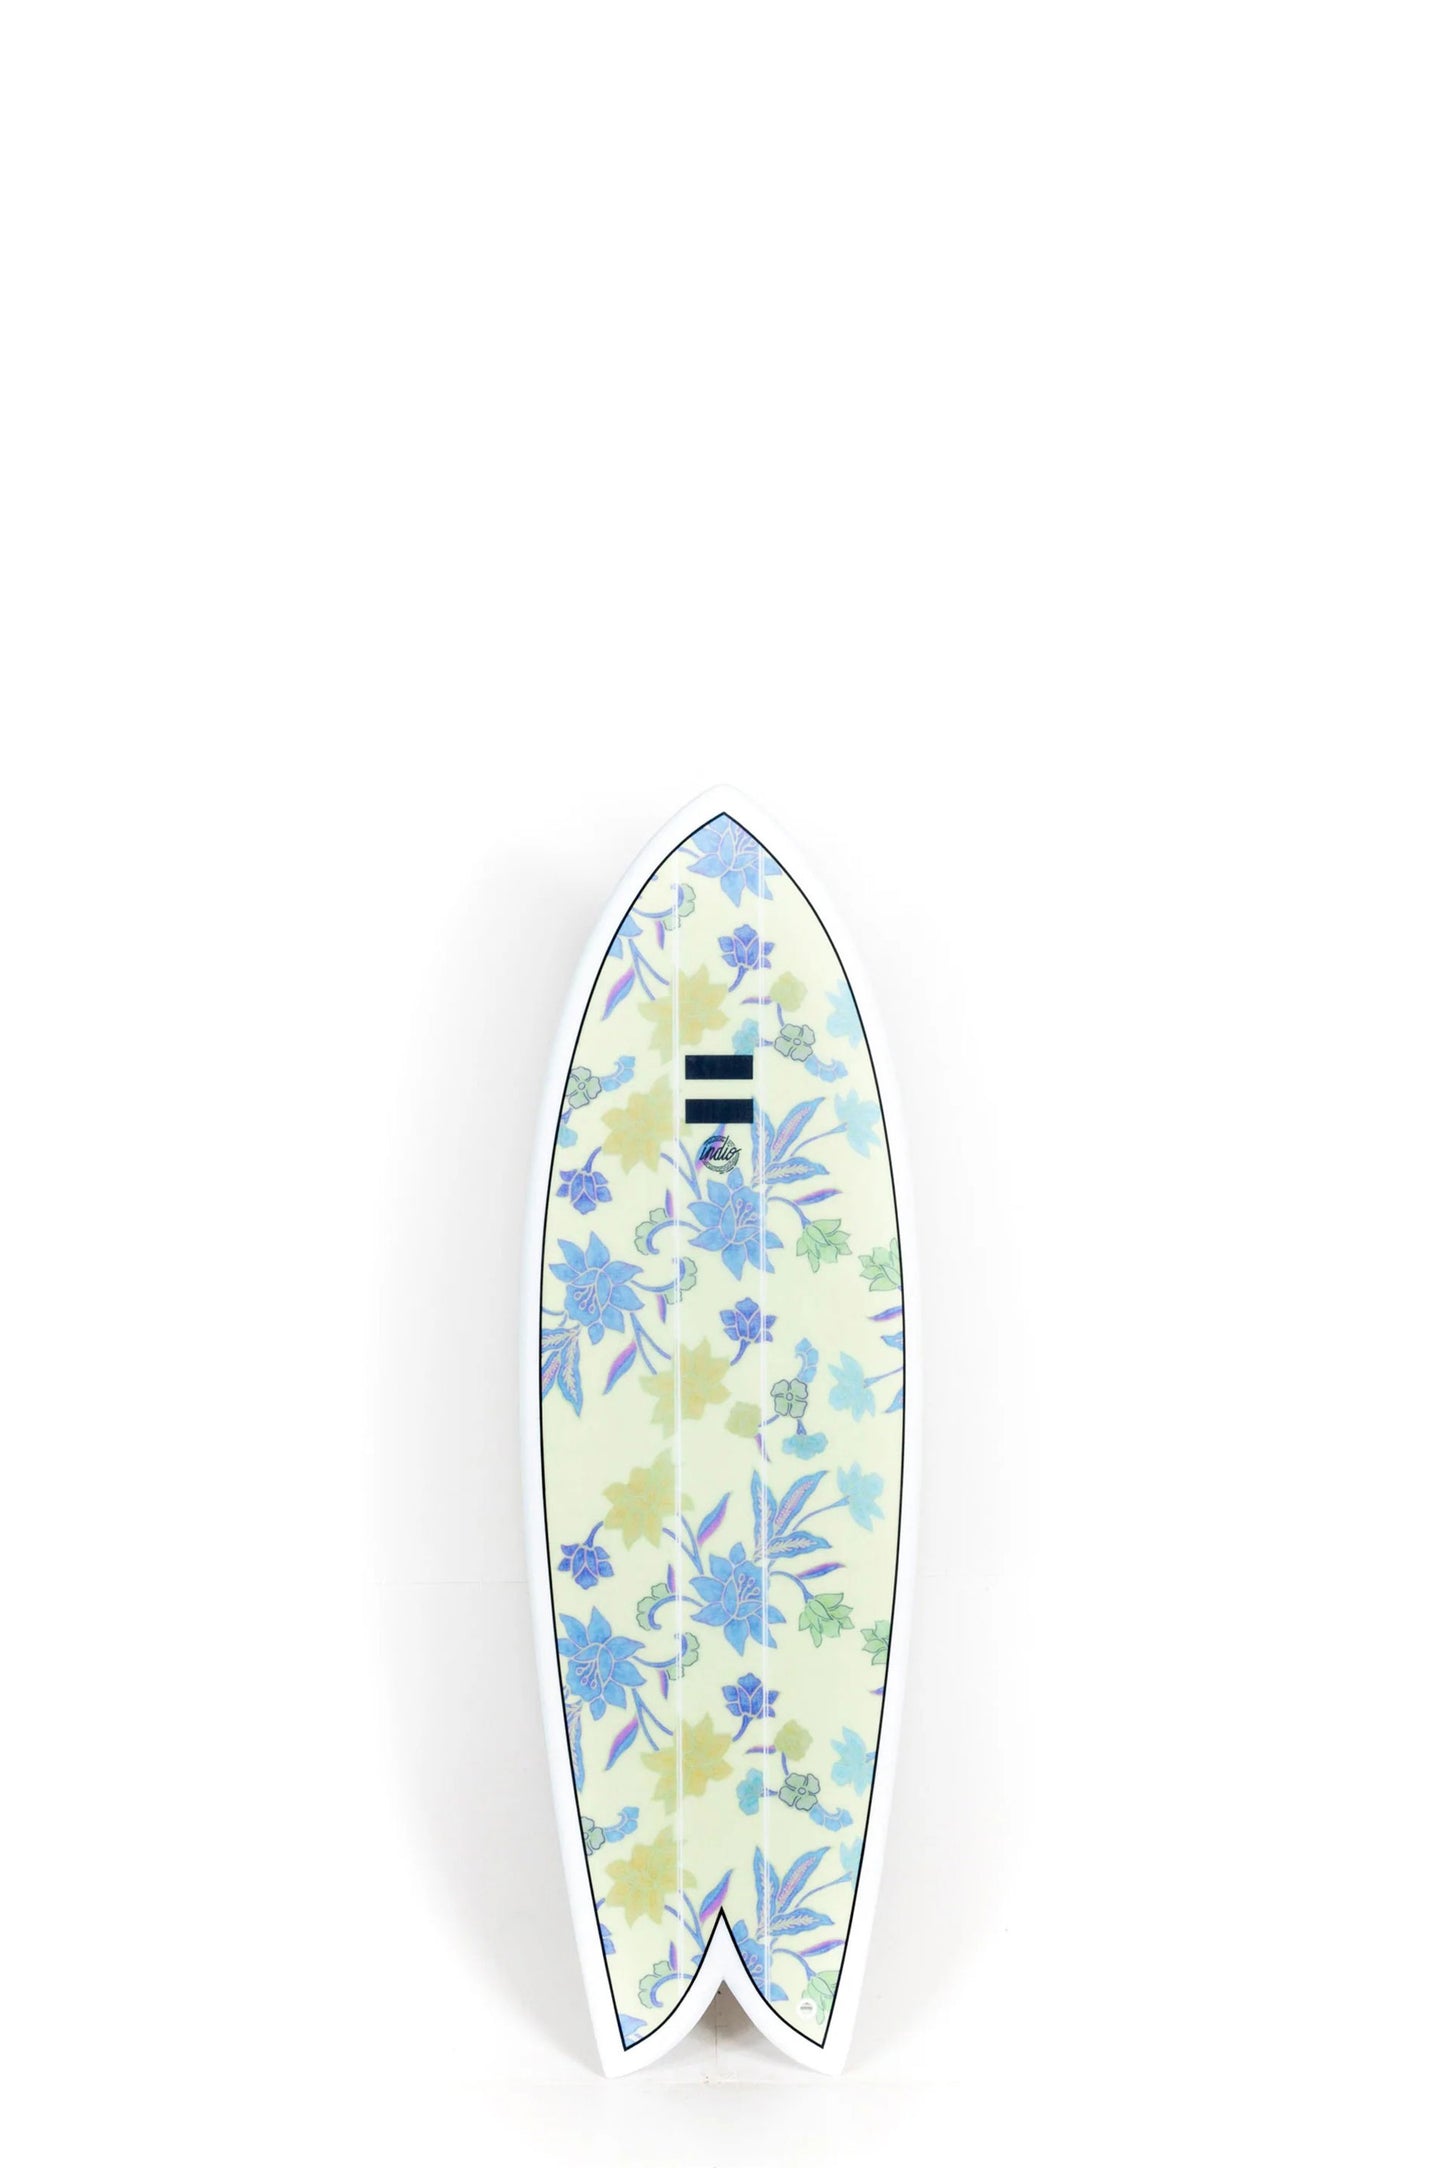 Indio Surfboards - DAB Flowers - 5’7” x 21 x 2 1/2 x 35.8L.